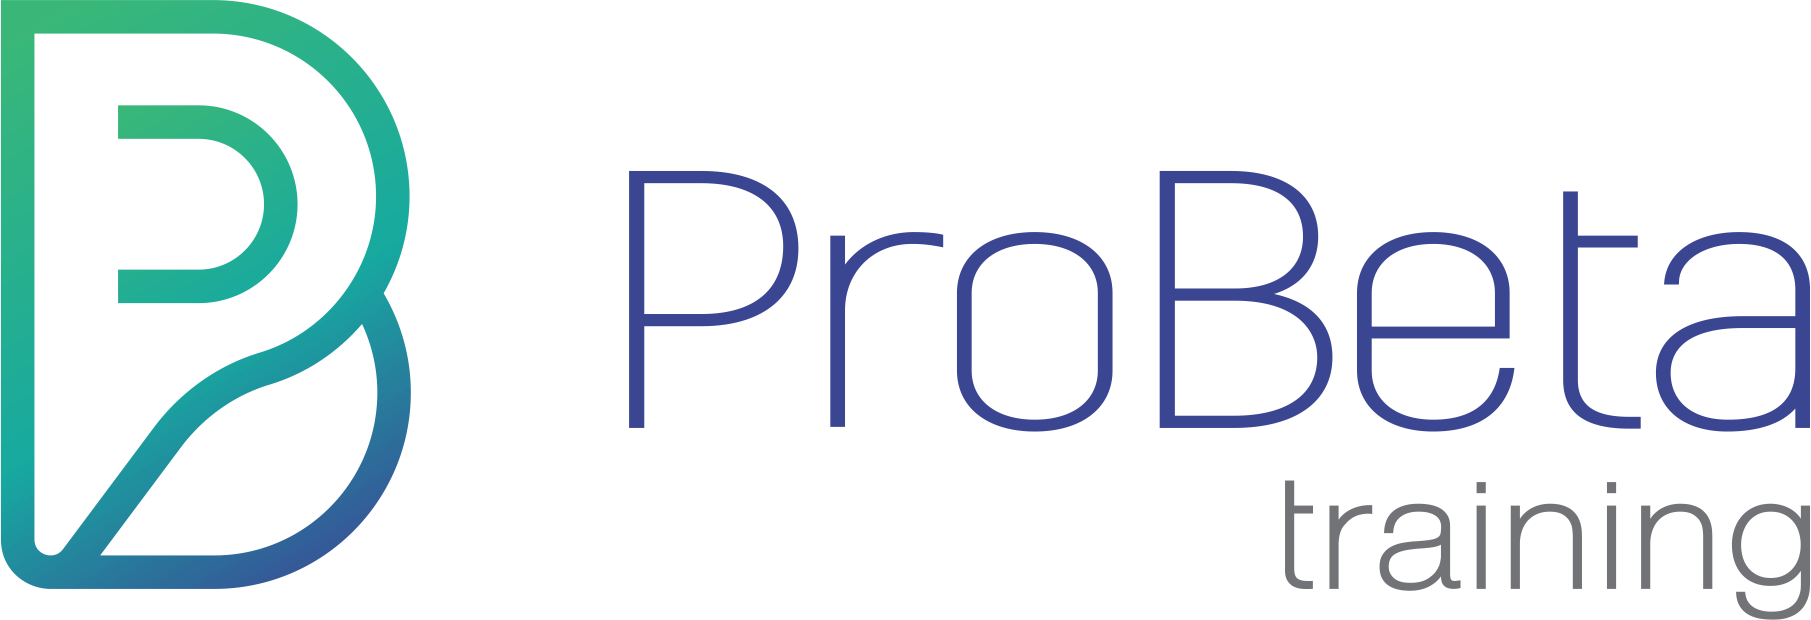 Probeta Training Logo